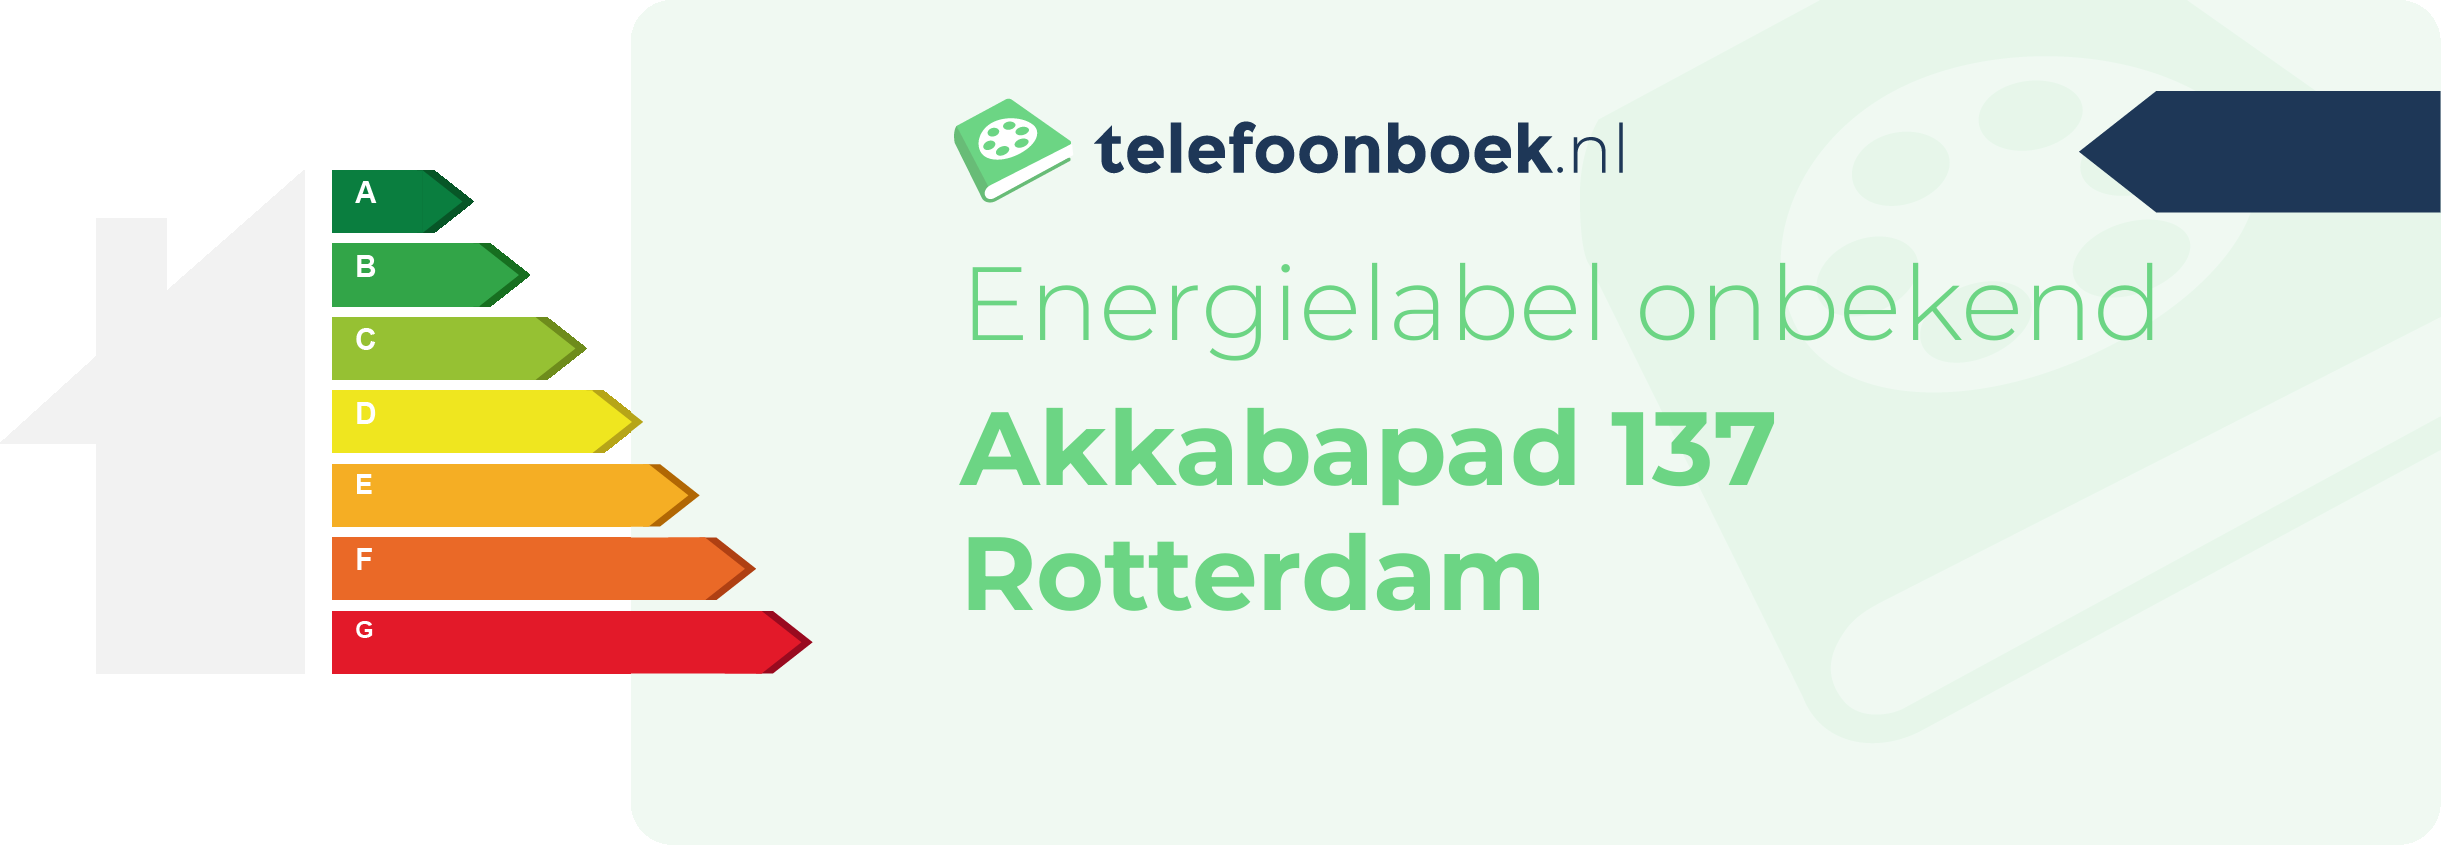 Energielabel Akkabapad 137 Rotterdam